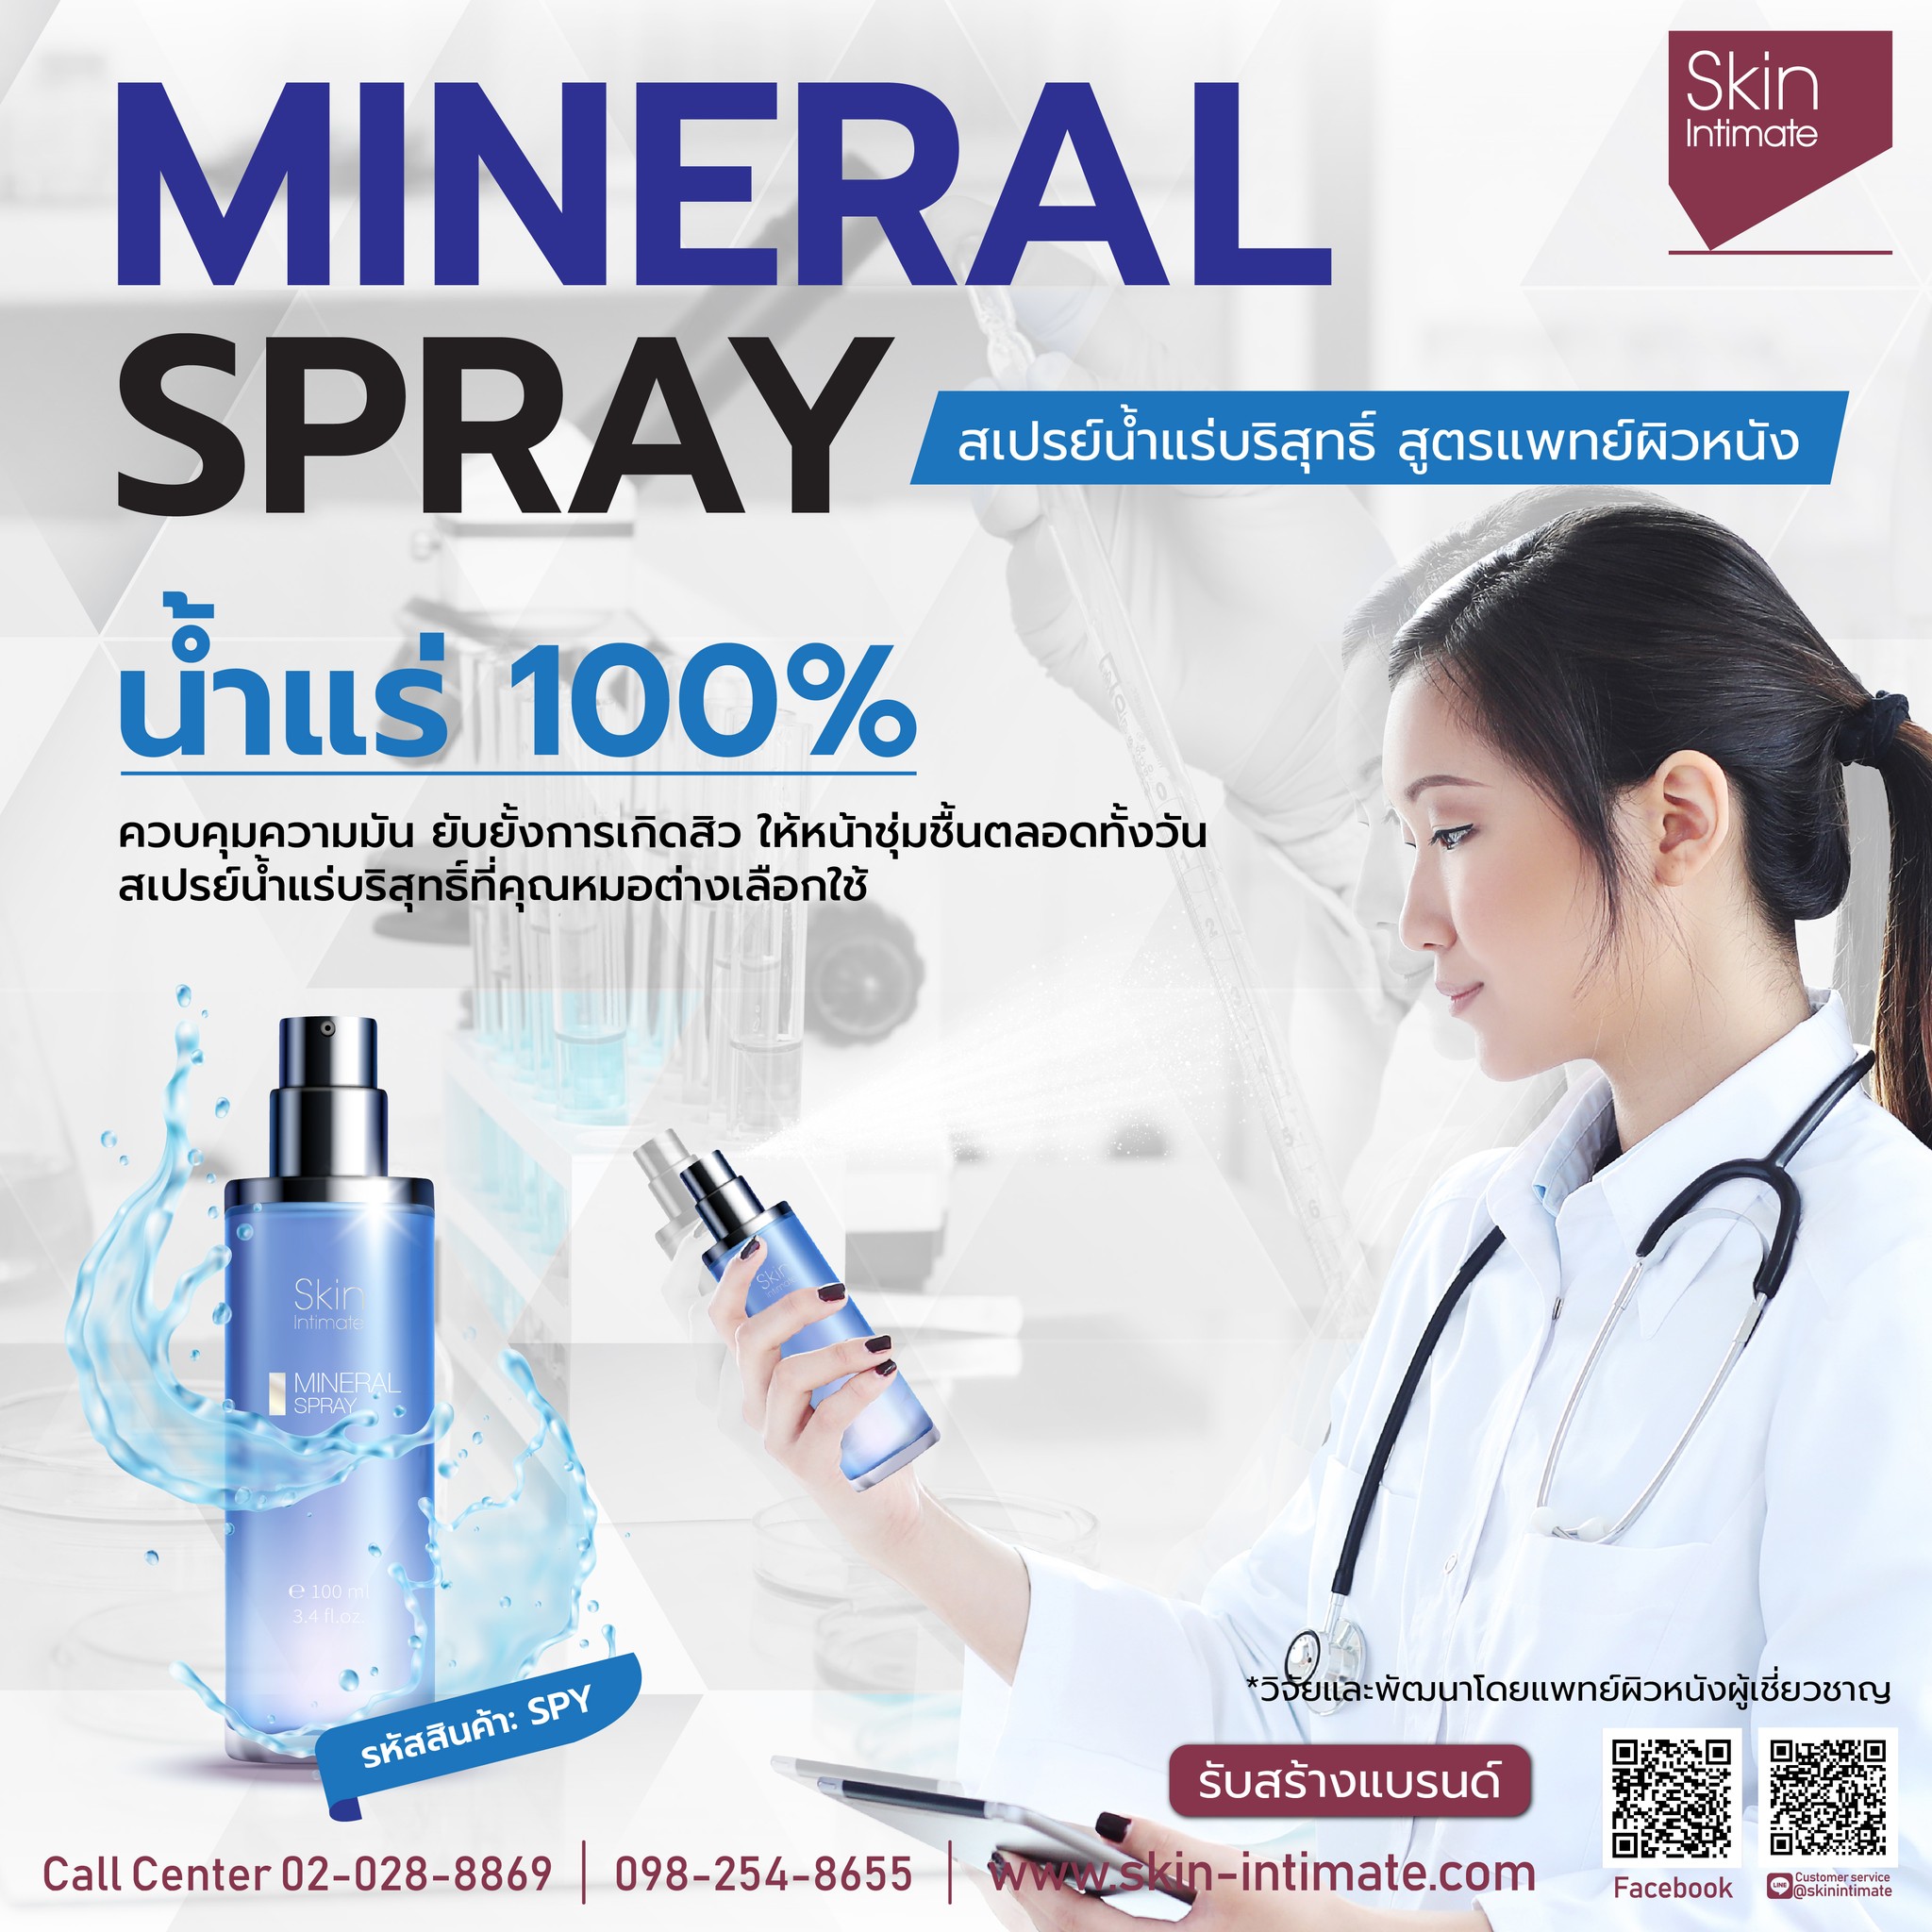 skin-intimate, Mineral Spray